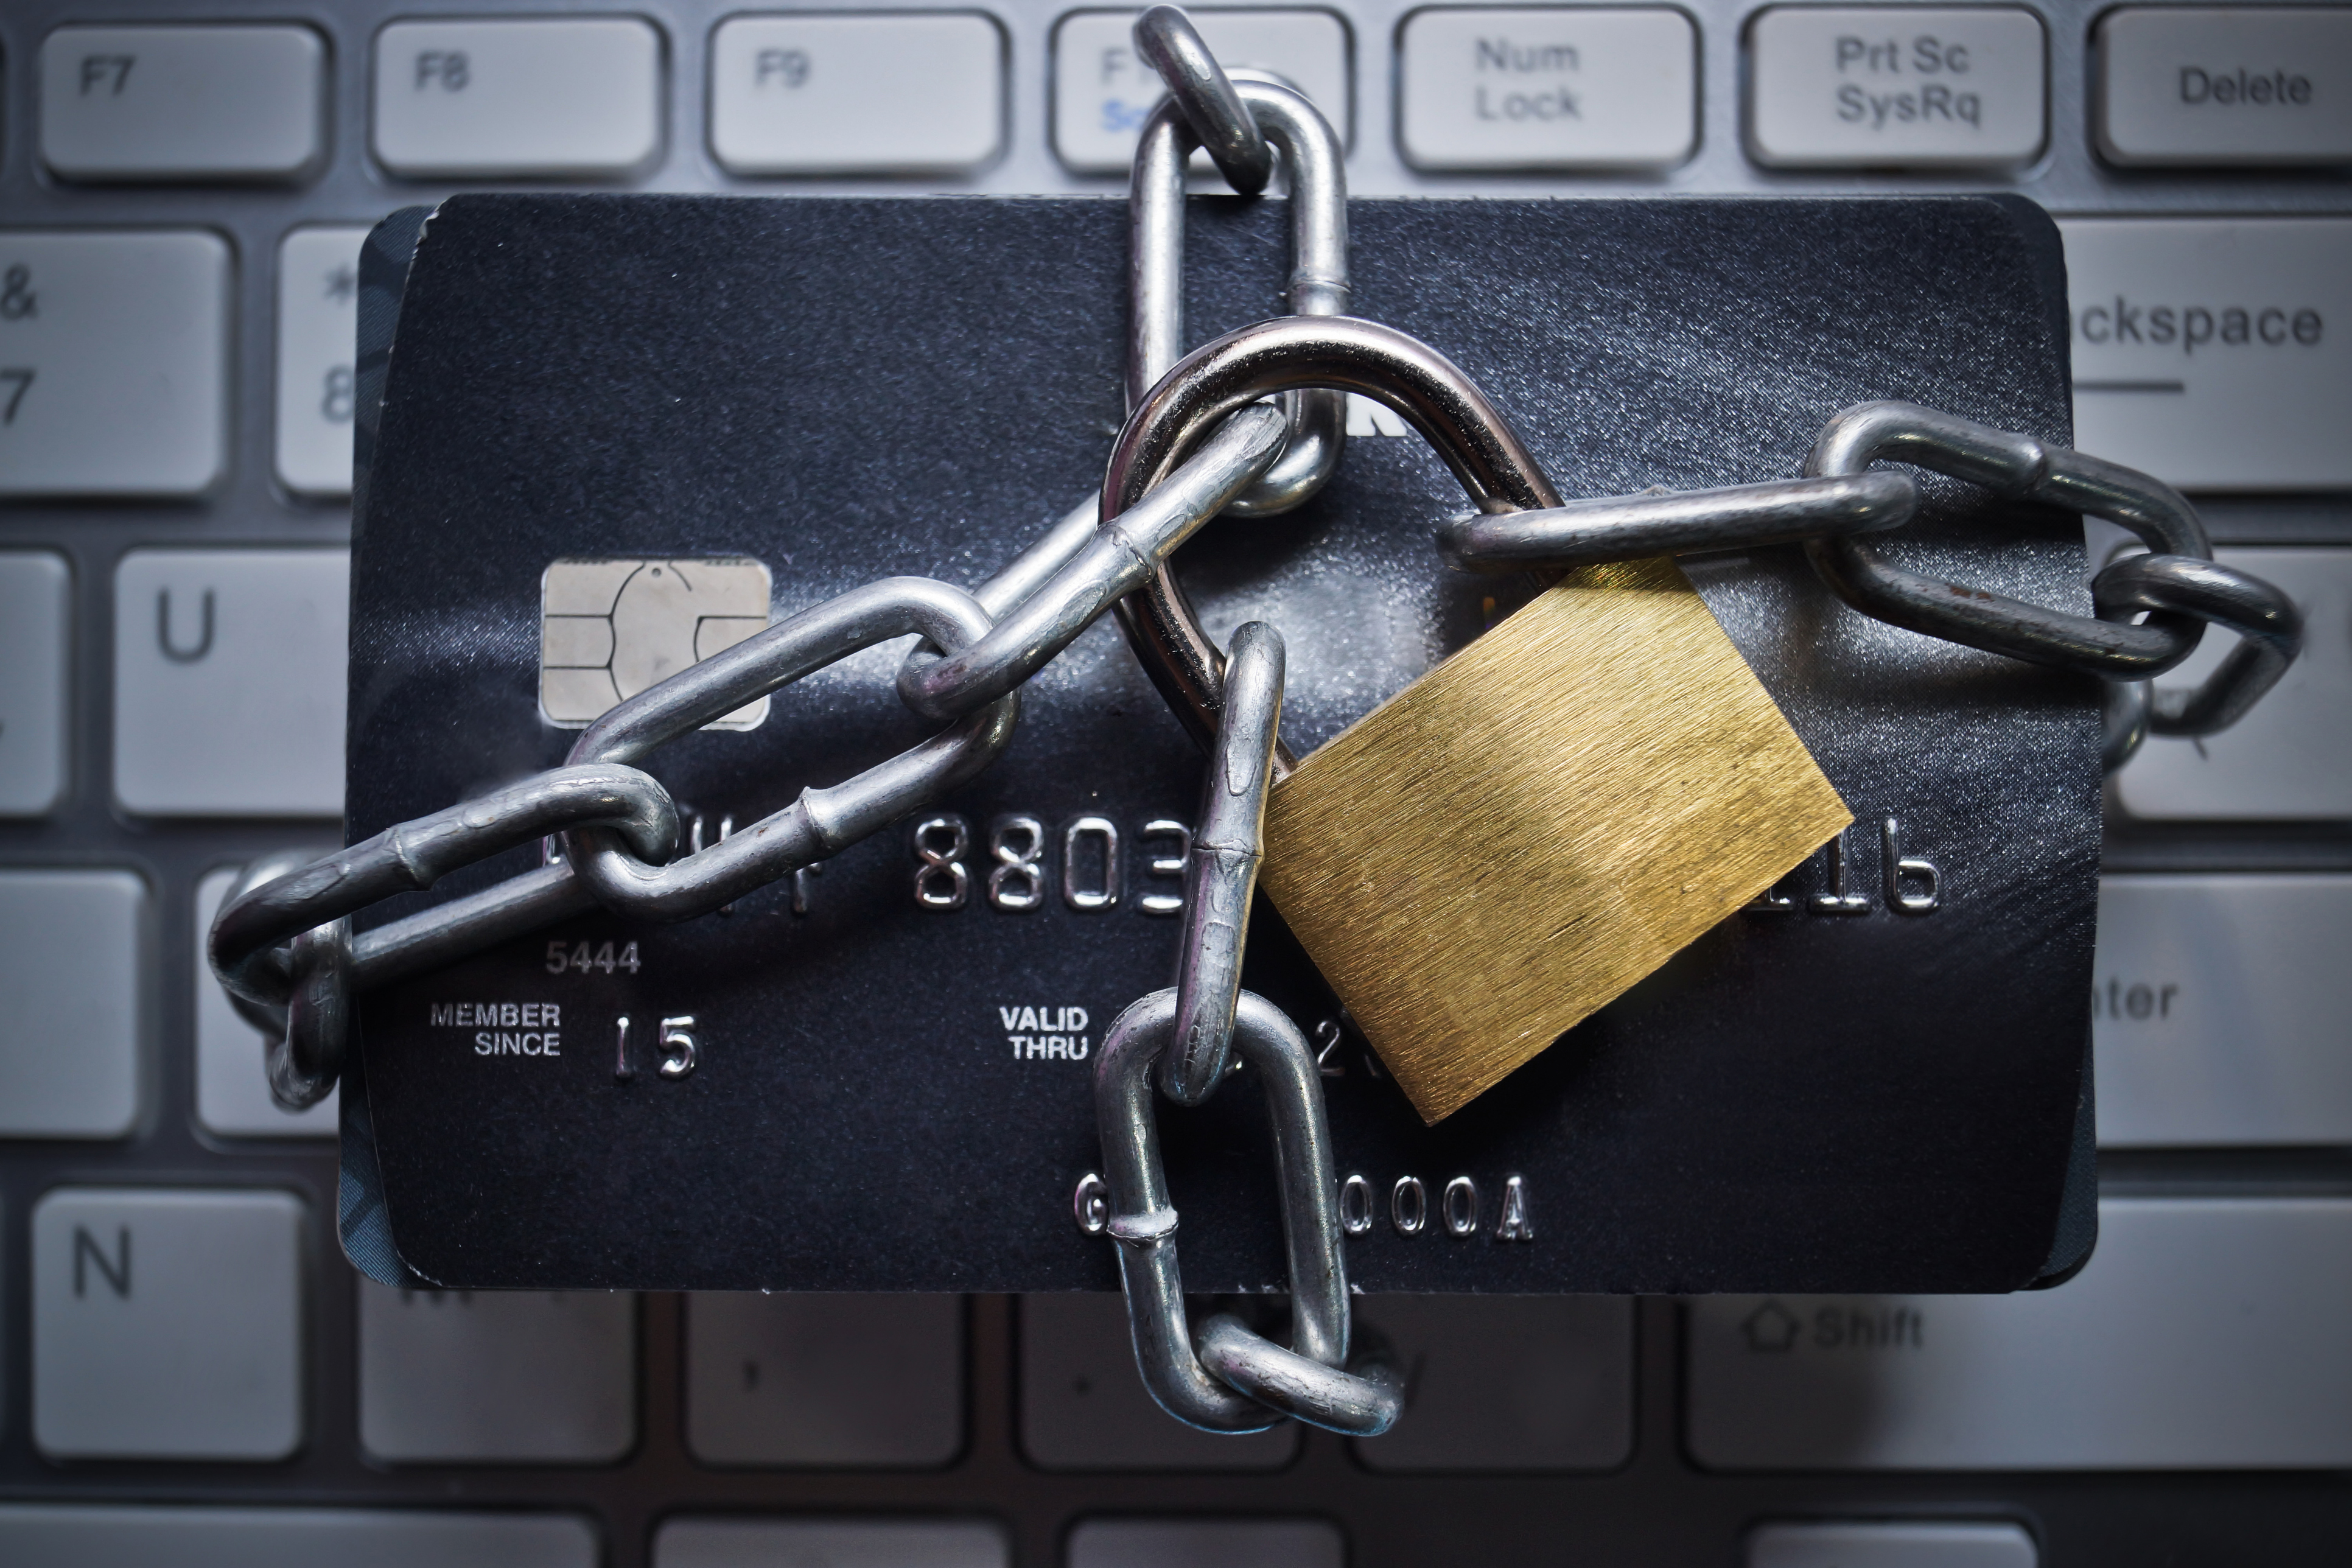 Zelle Scam Targeting Your Online Banking Credentials  